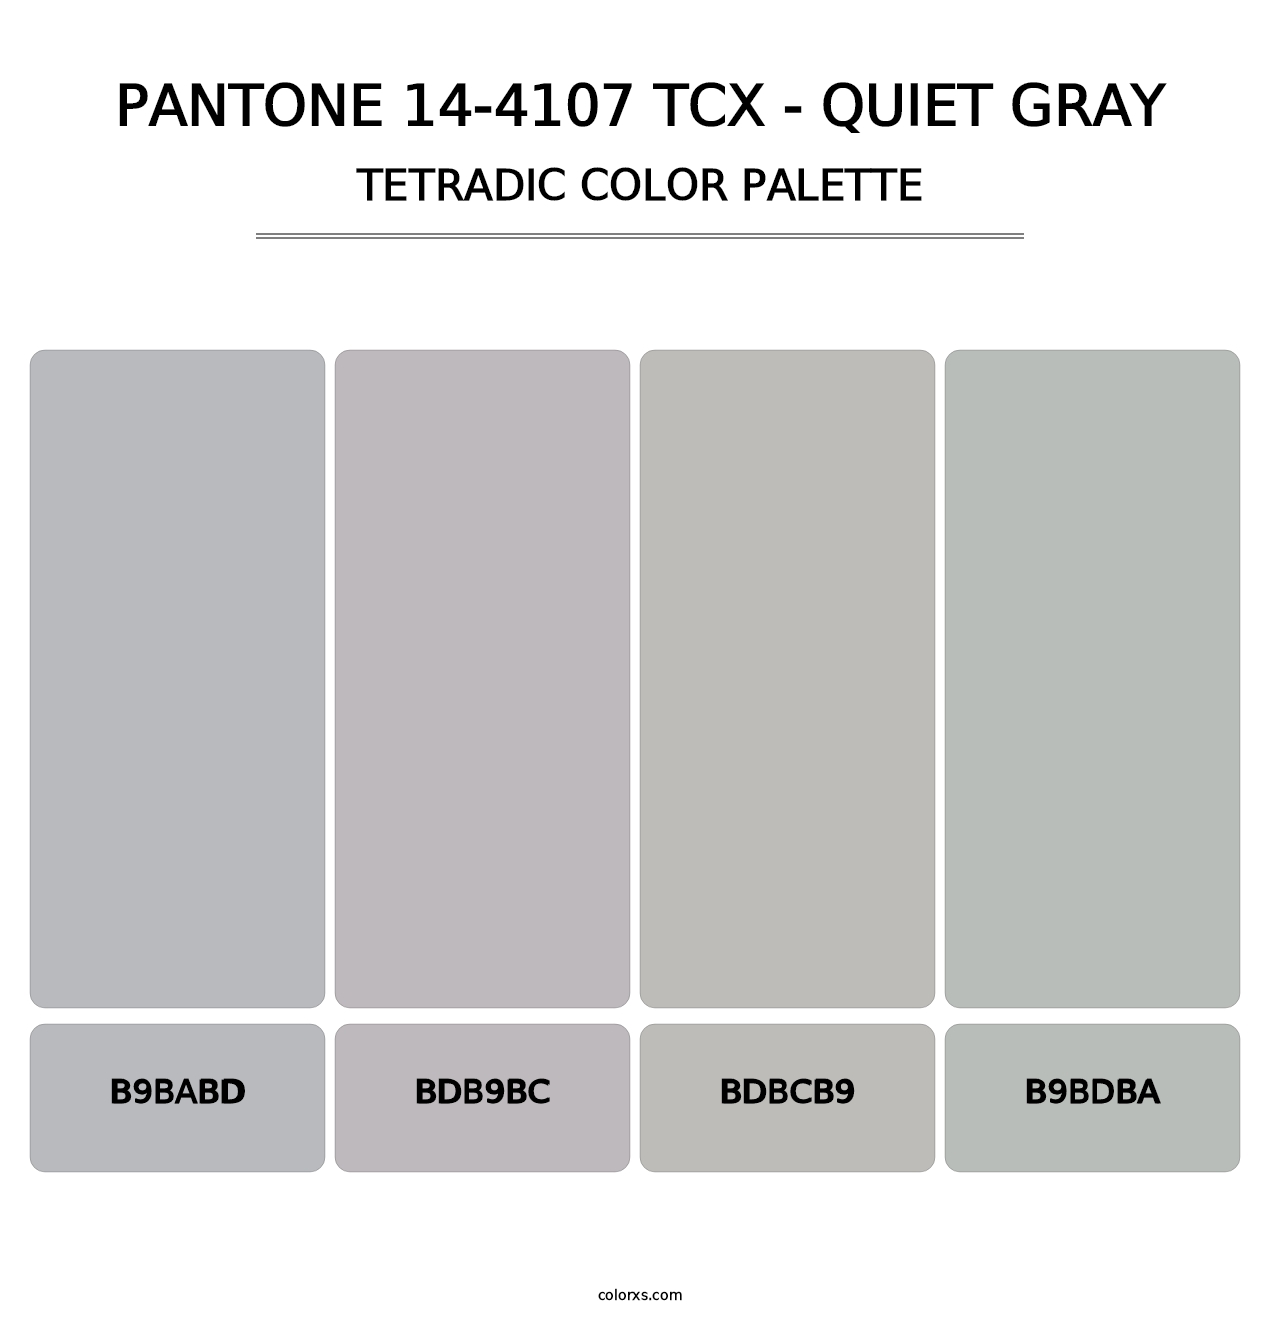 PANTONE 14-4107 TCX - Quiet Gray - Tetradic Color Palette